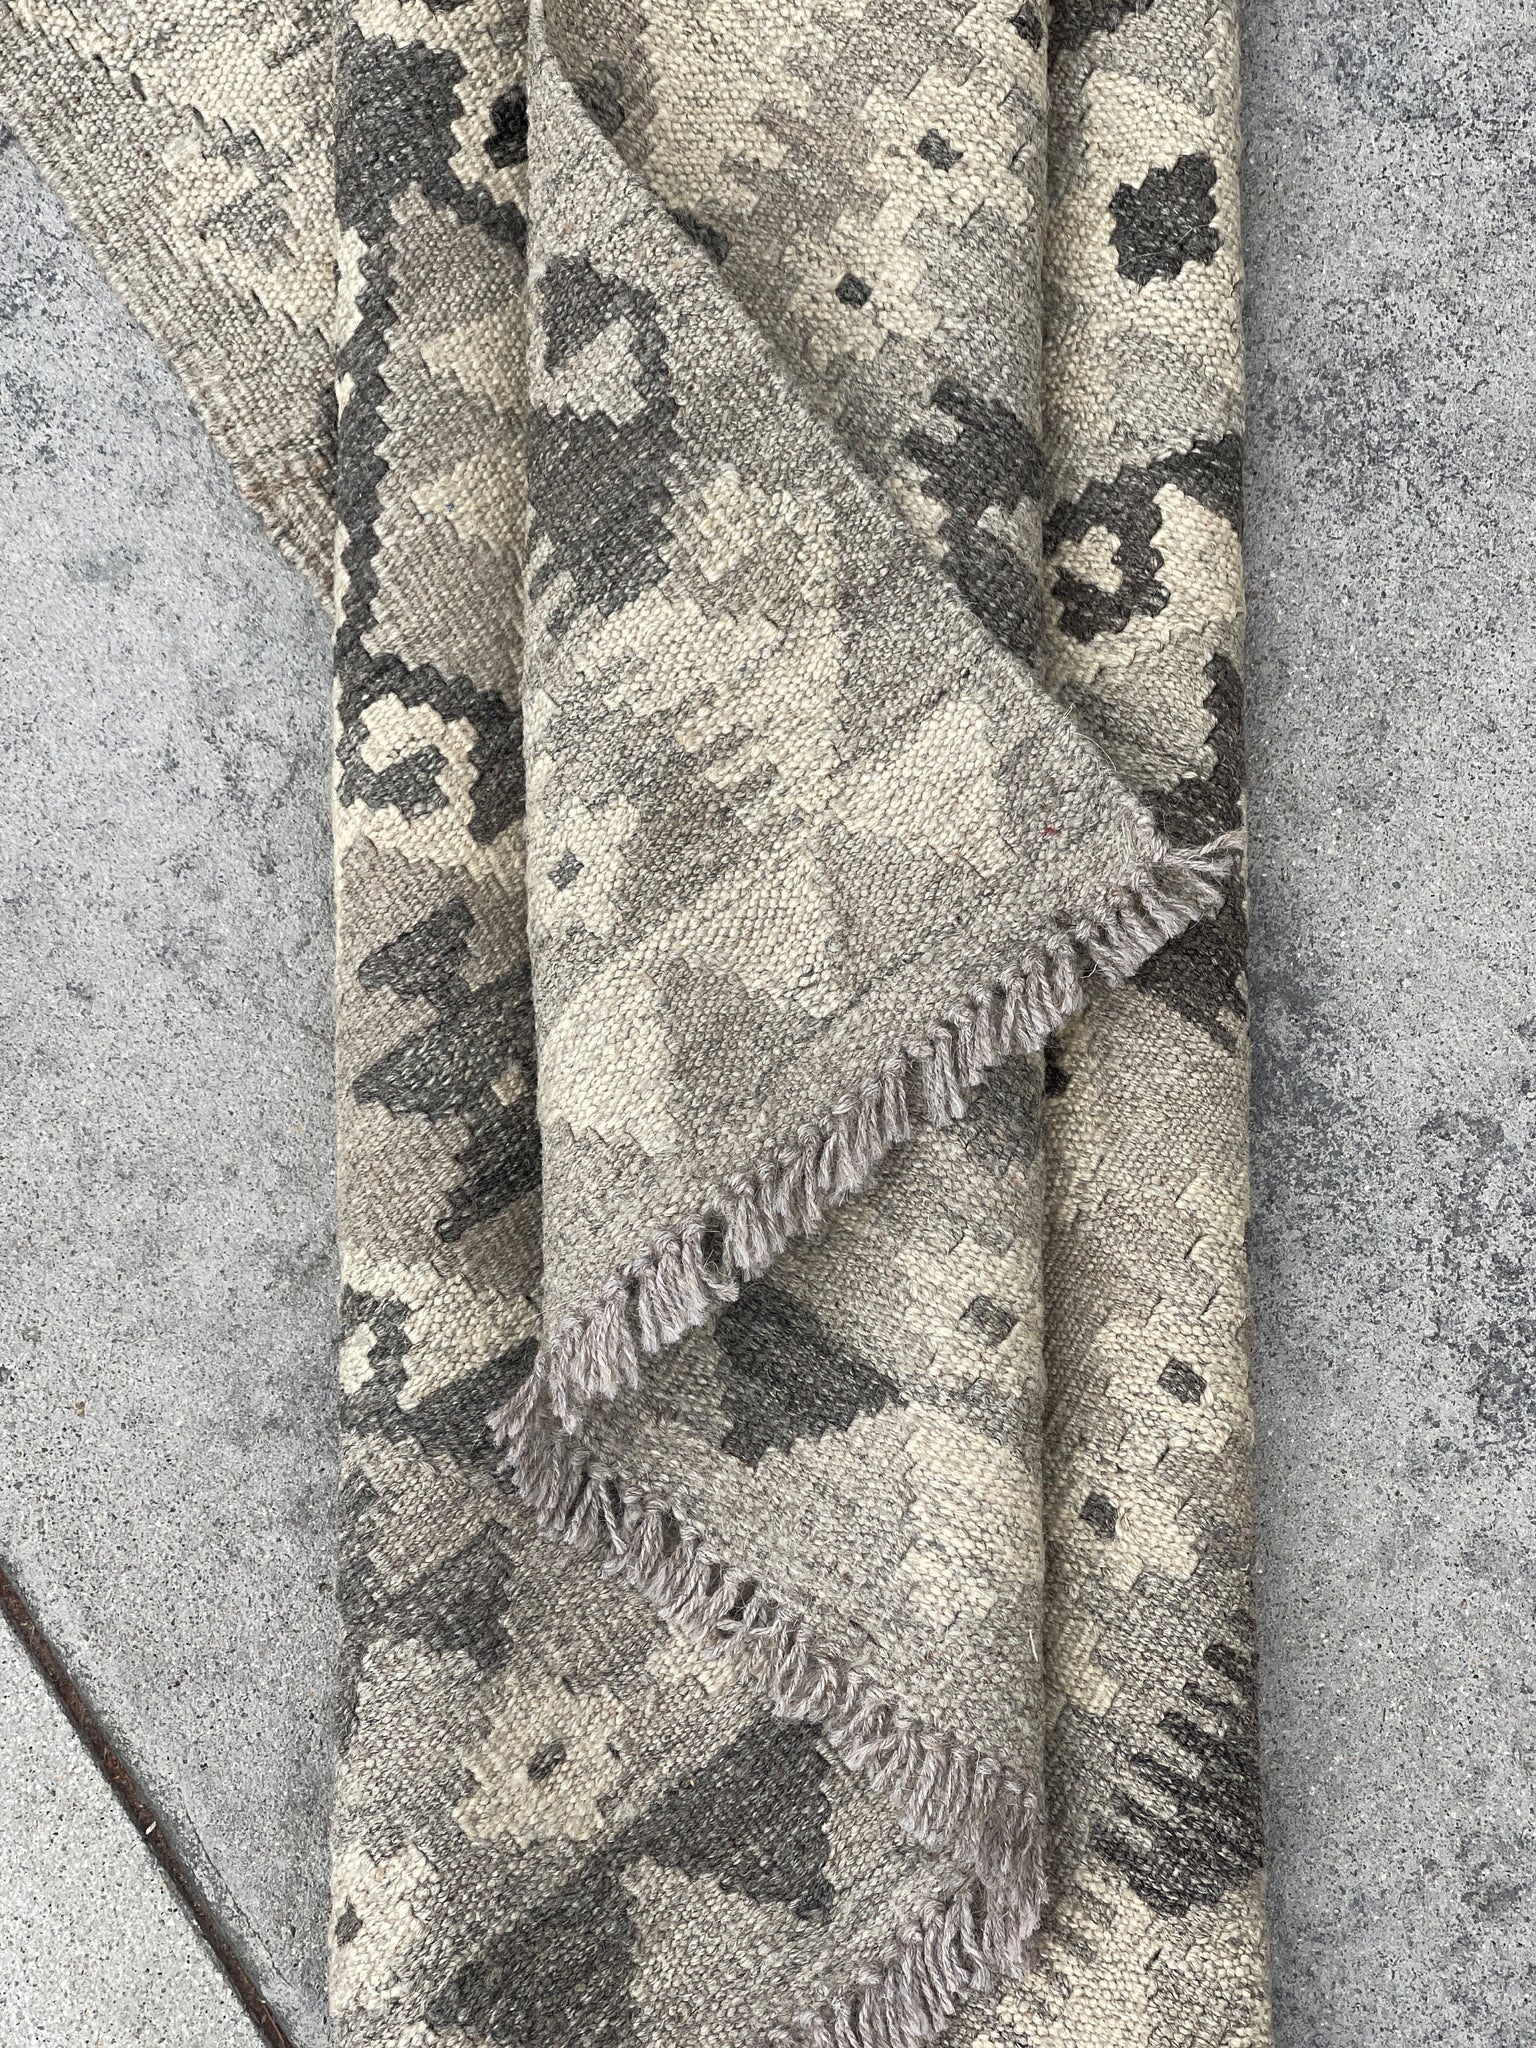 3x9 (90x275) Handmade Afghan Kilim Runner Rug | Light Grey Gray Ivory Cream | Flatweave Flat Weave Tribal Turkish Moroccan Oriental Wool